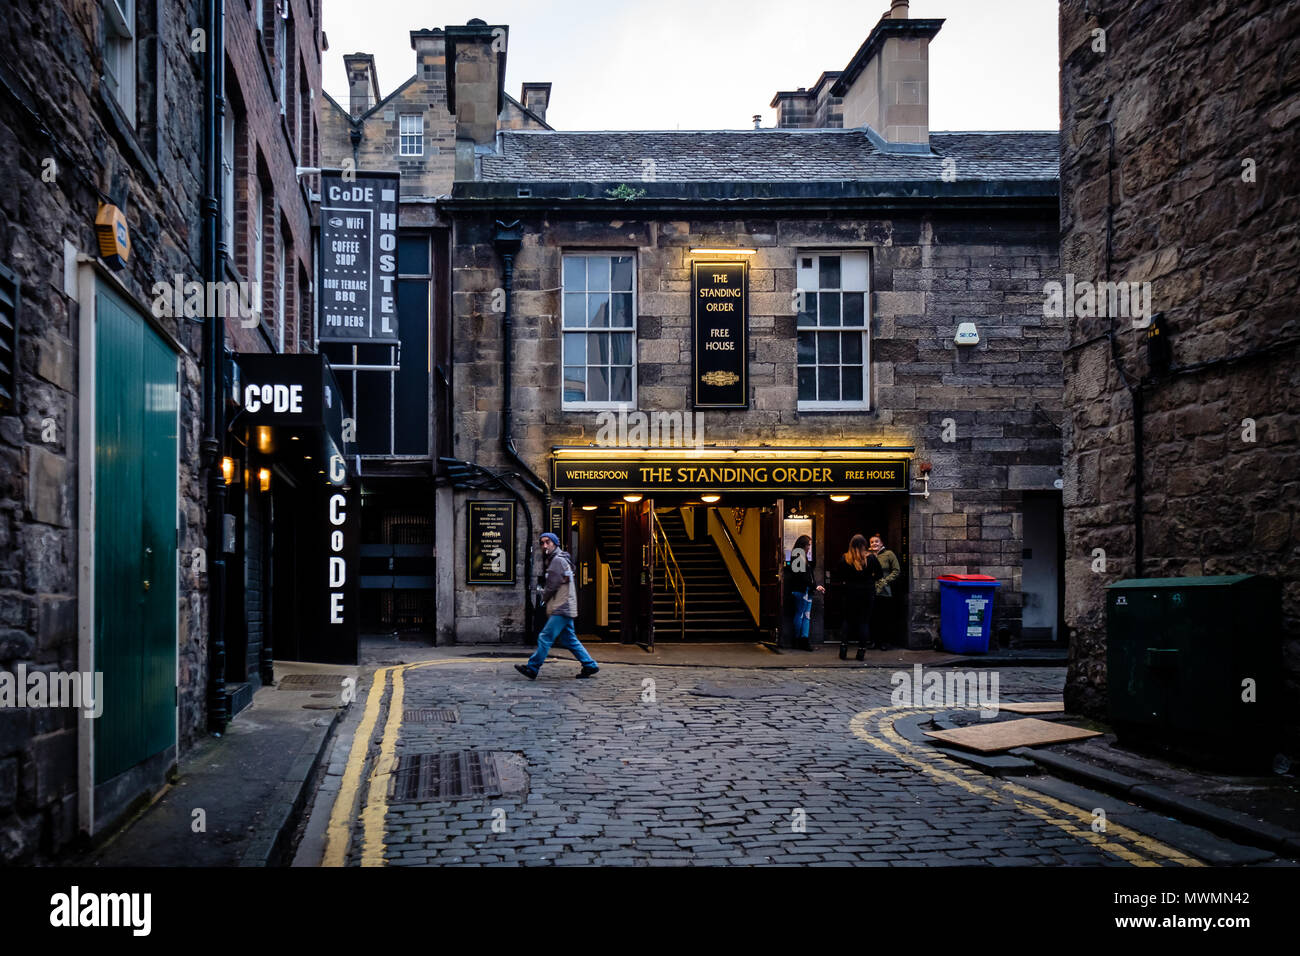 Edinburgh, Scotland - April 27, 2017 : The Standing order pub, famous old pubs in Edinburgh on Rose Street. Edinburgh, Scotland Stock Photo